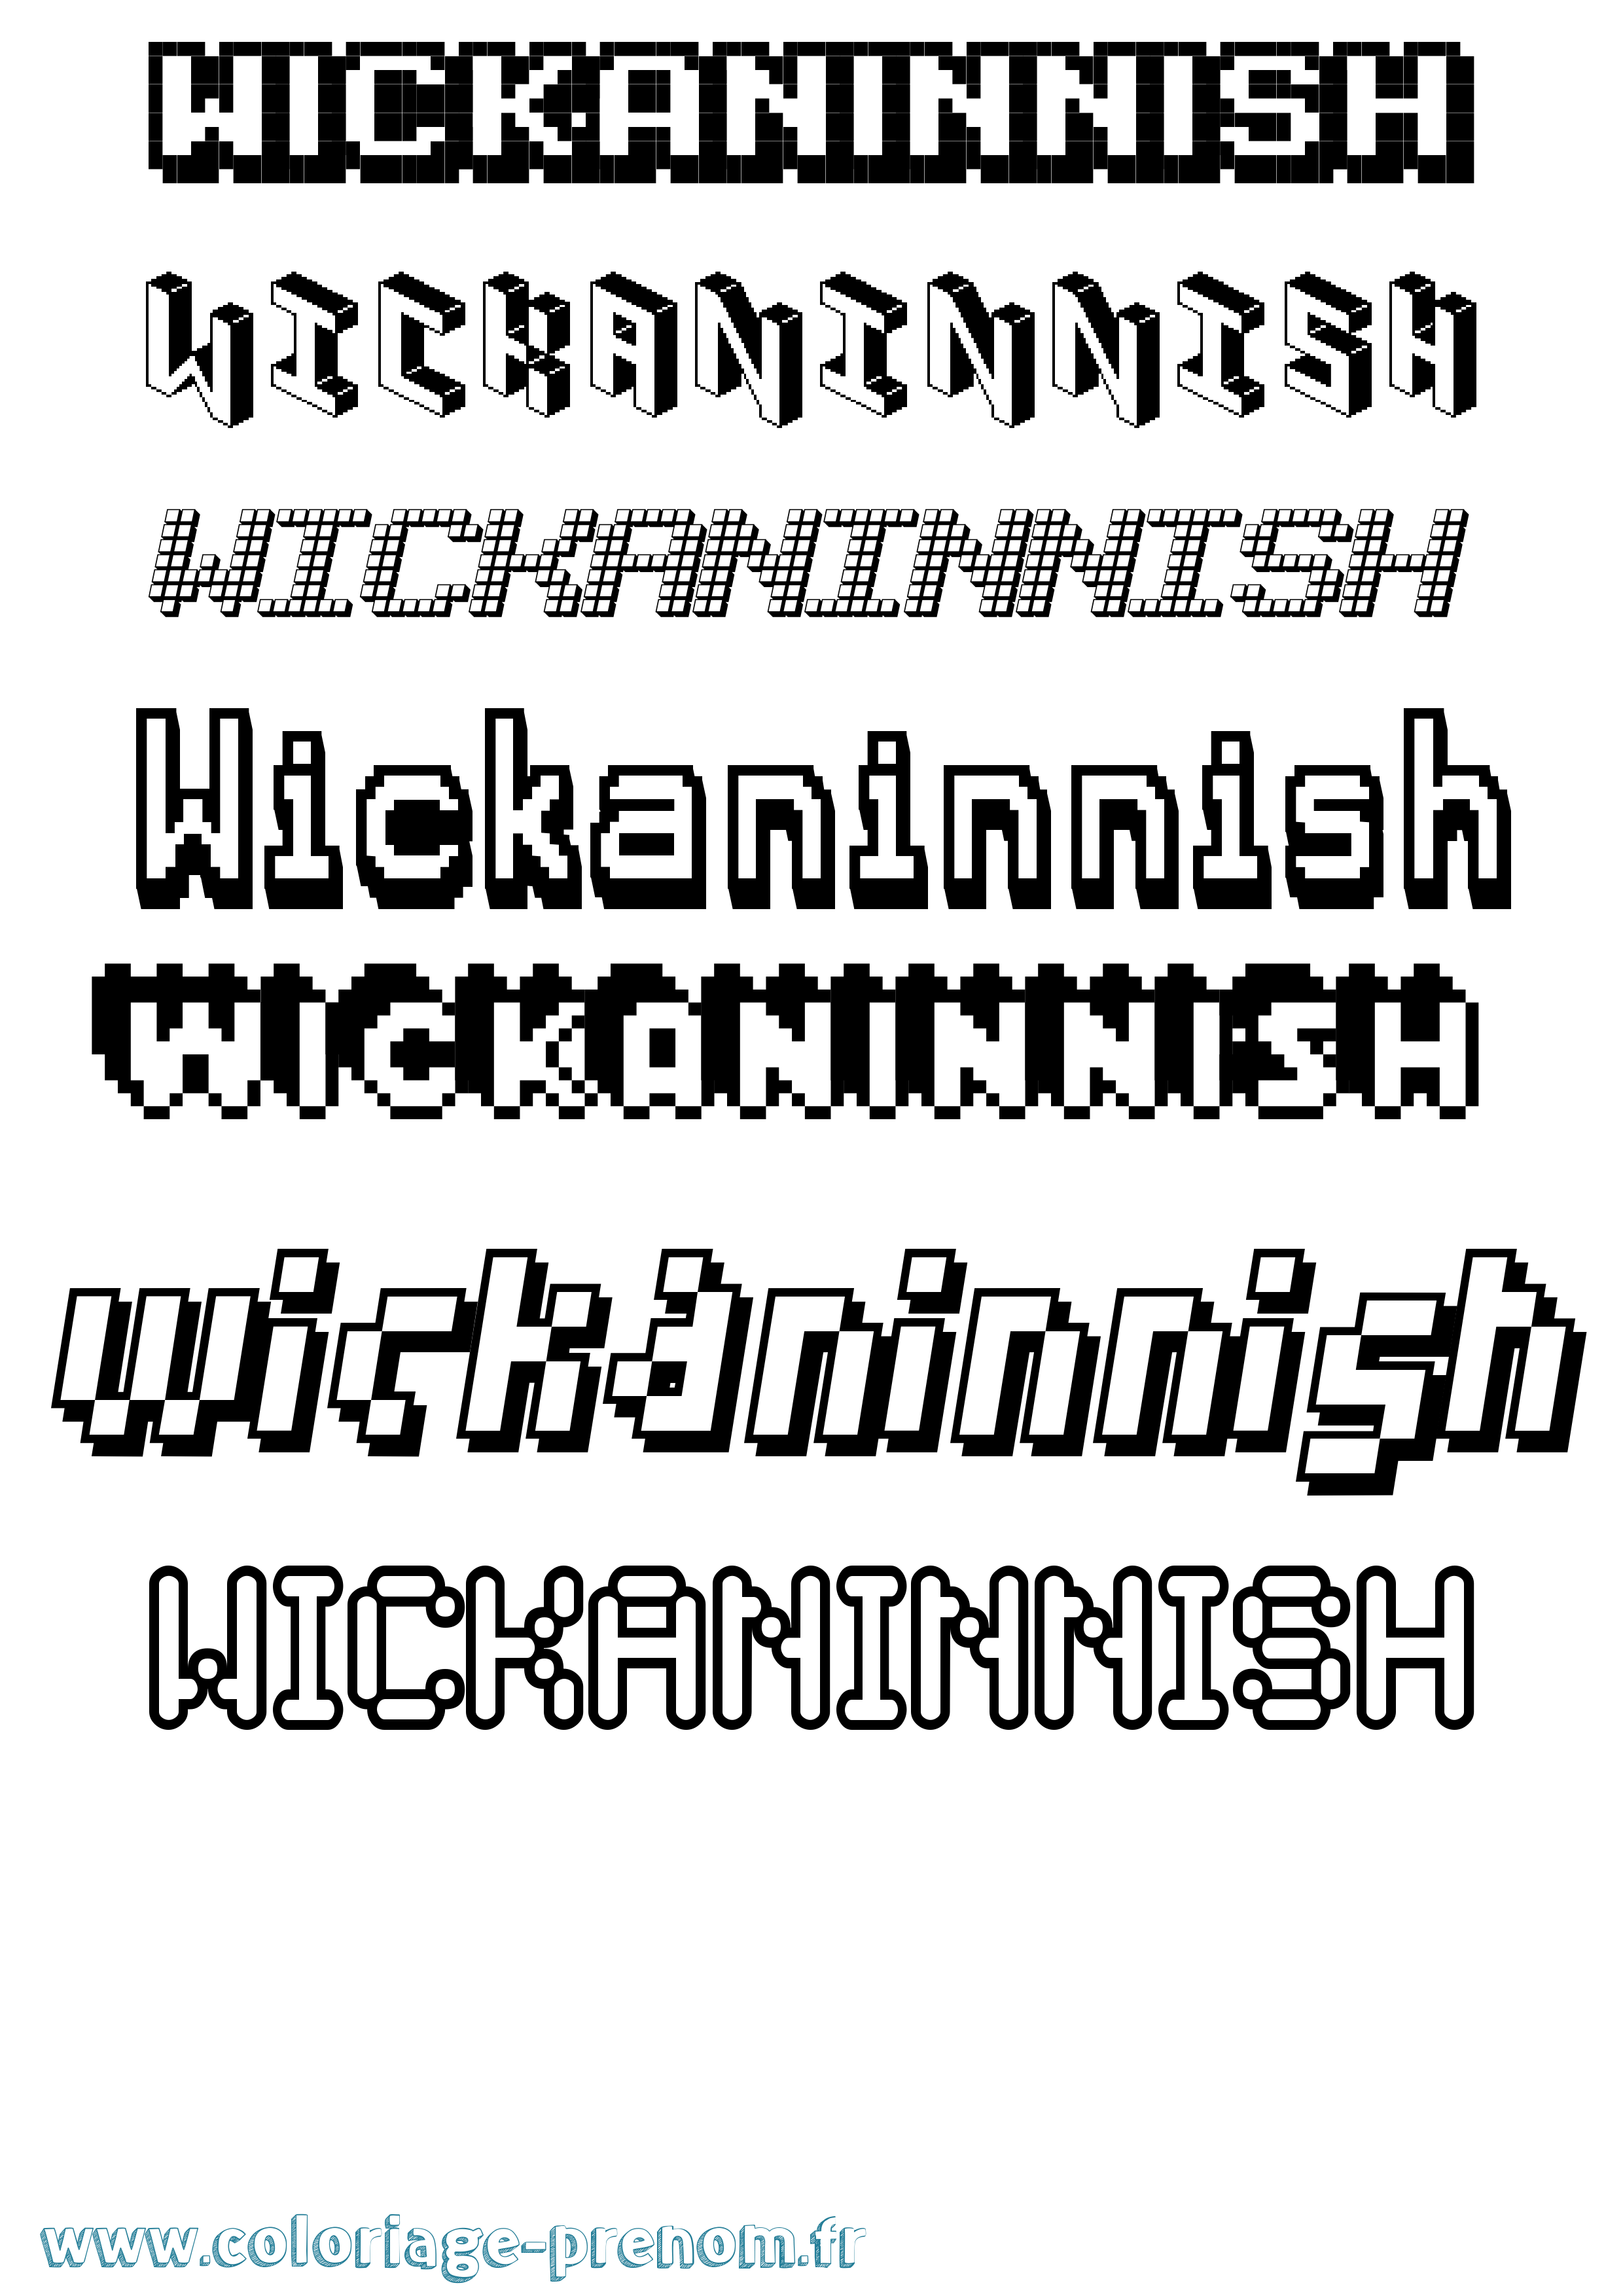 Coloriage prénom Wickaninnish Pixel